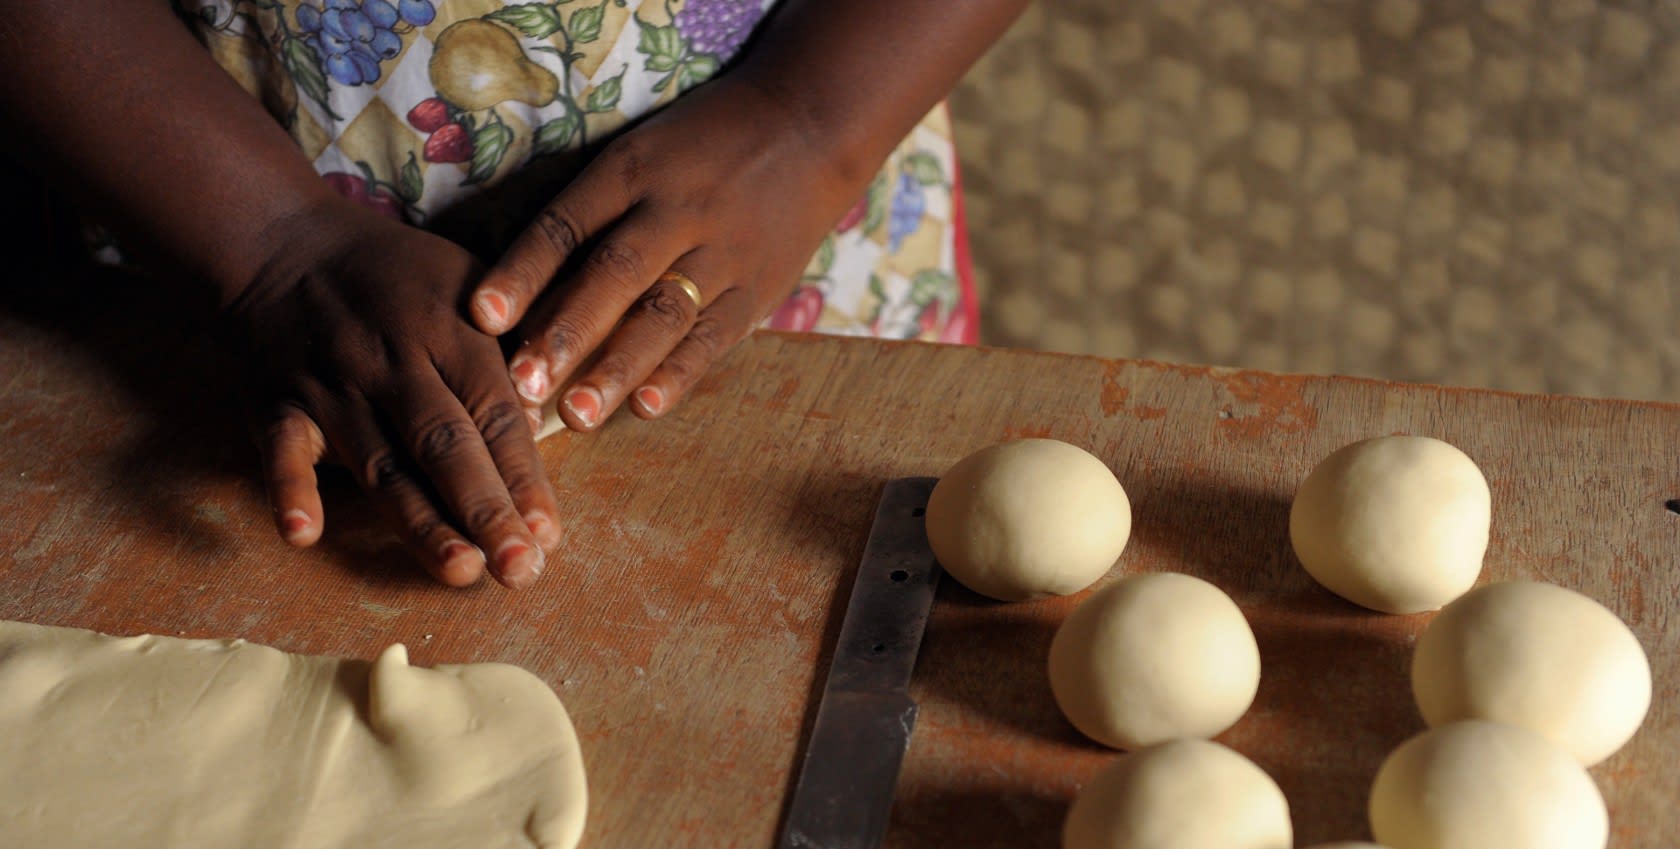 A woman's hand making bread dough